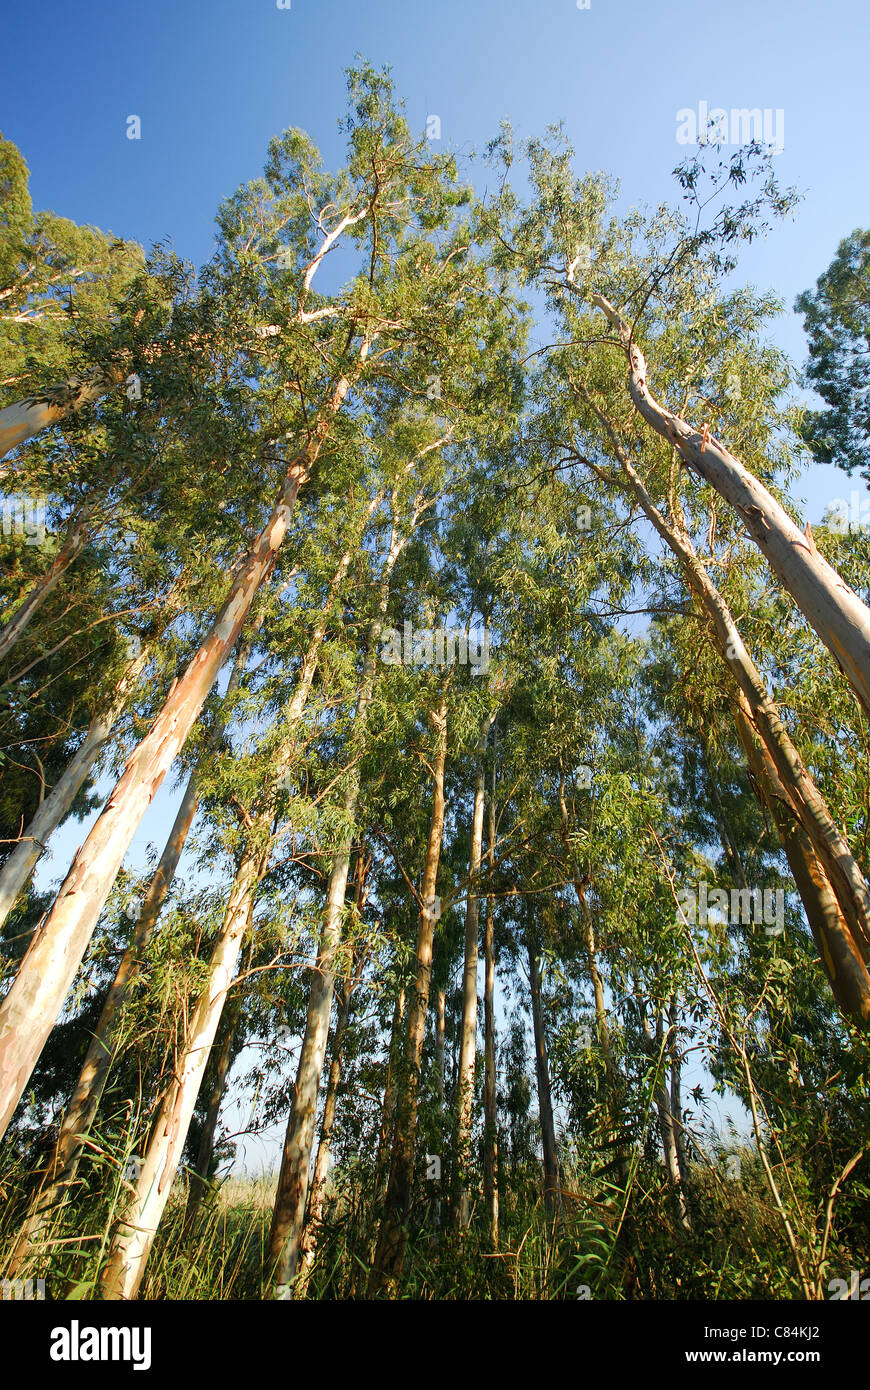 TURKEY. Eucalyptus trees Eucalyptus globulus. Stock Photo